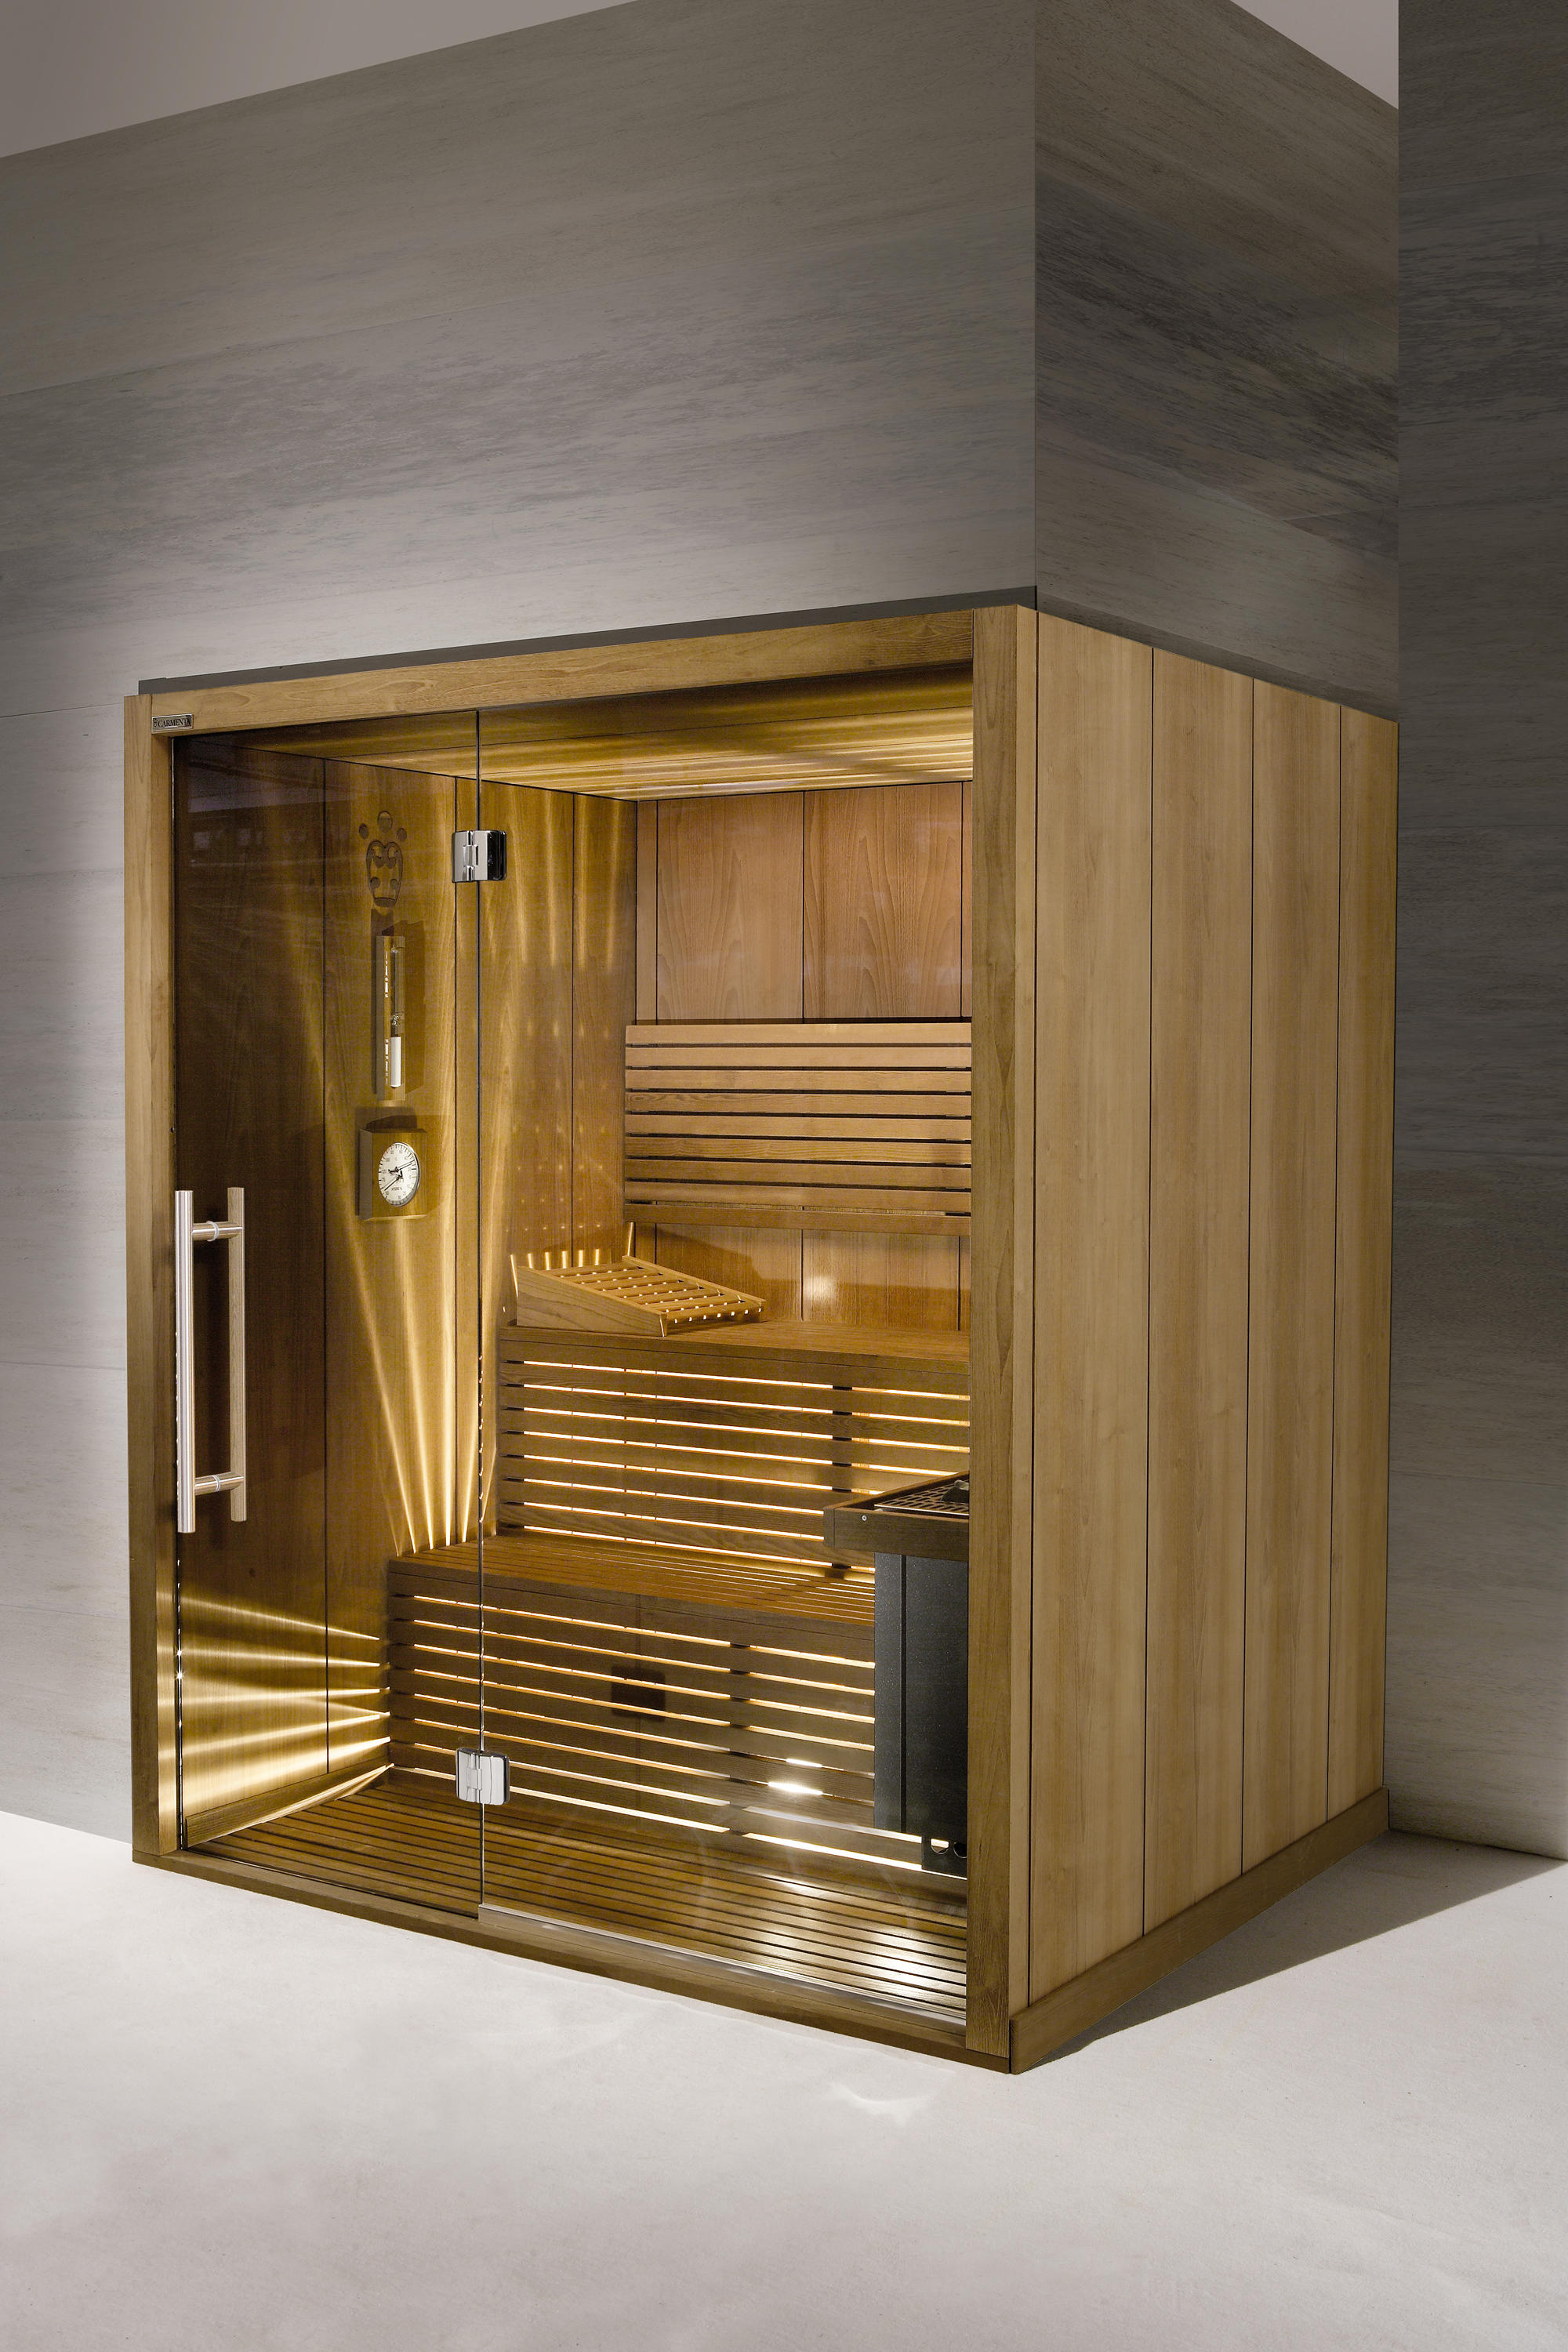 Sensation Sauna Pro & designer furniture | Architonic